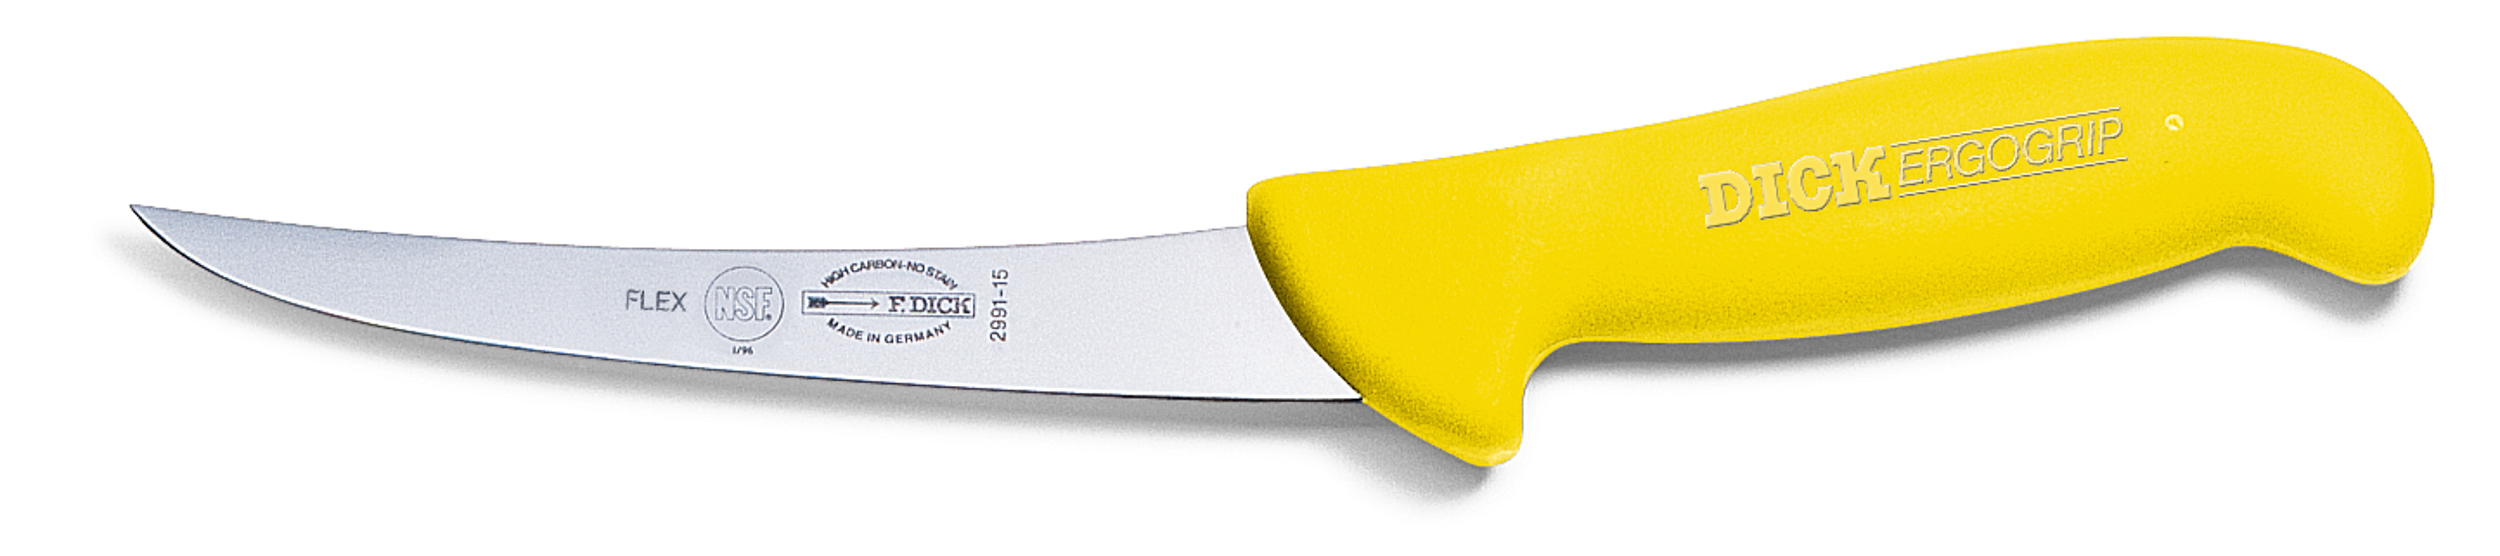 Dick Ausbeinmesser 15 cm, flexibel mit geschweifter Klinge, gelber Griff, Serie "Ergogrip"